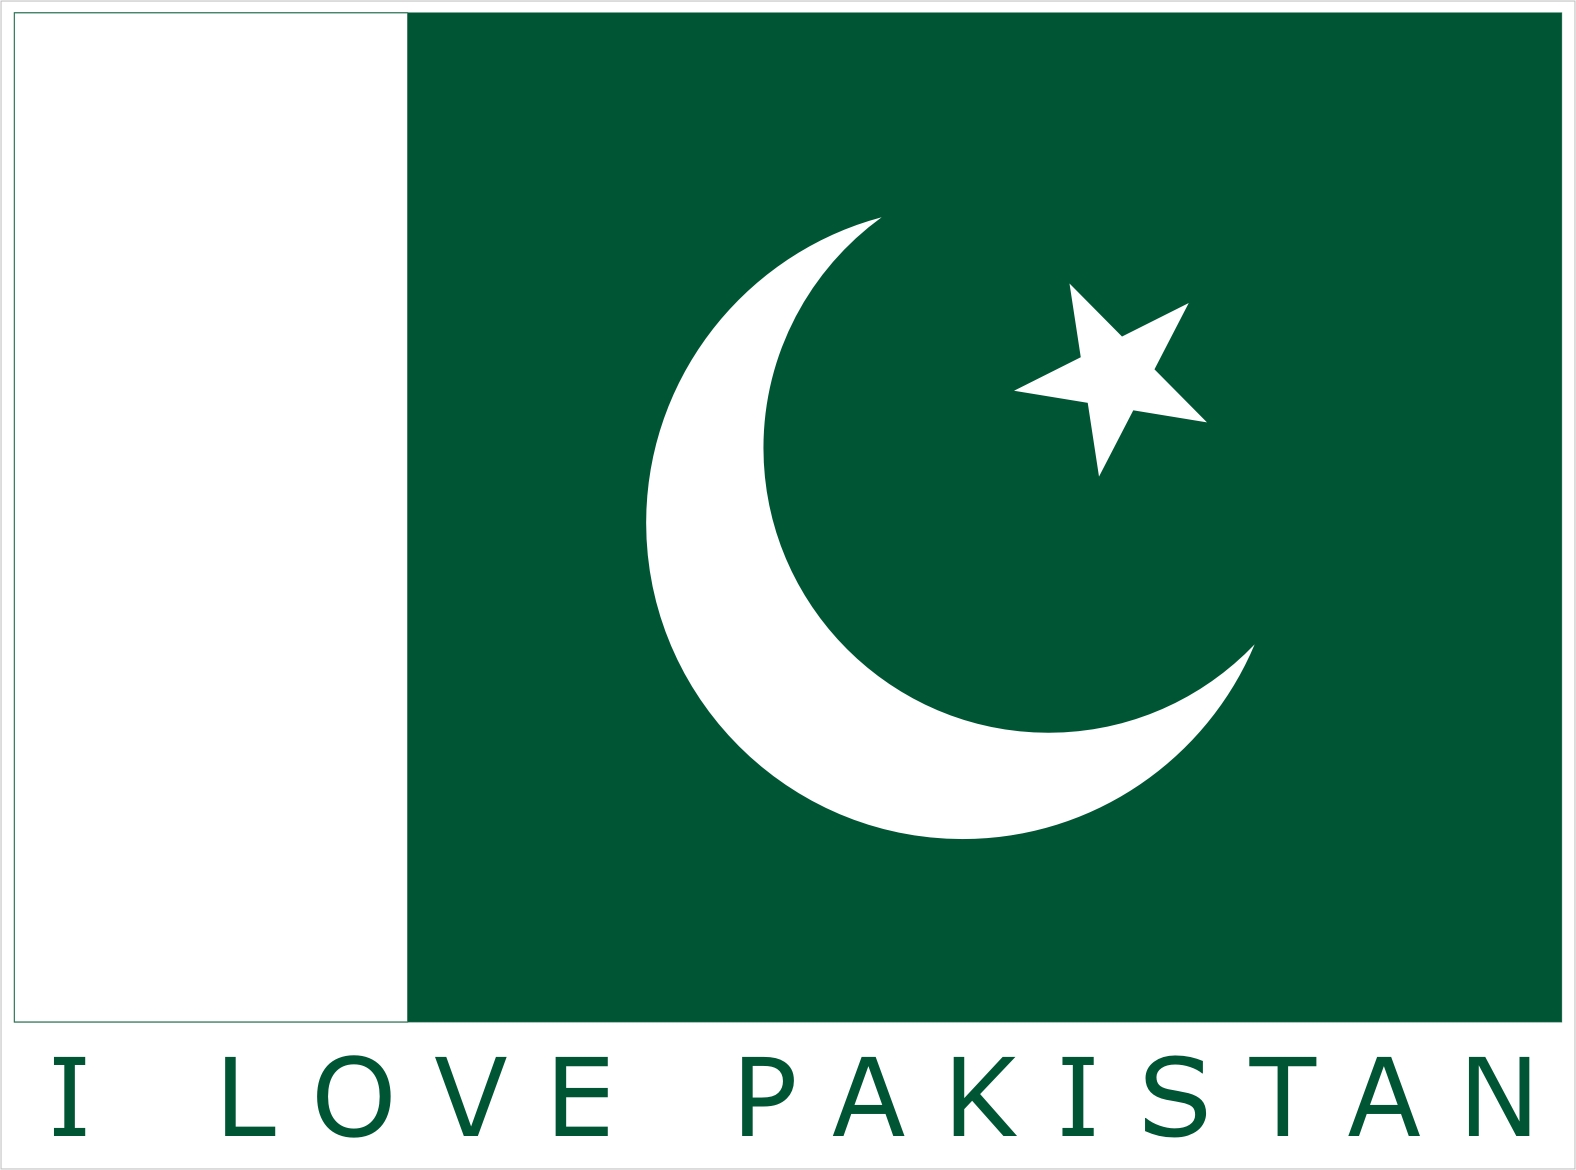 We Love Pakistan Live HD Wallpaper Hq Pictures Image Photos